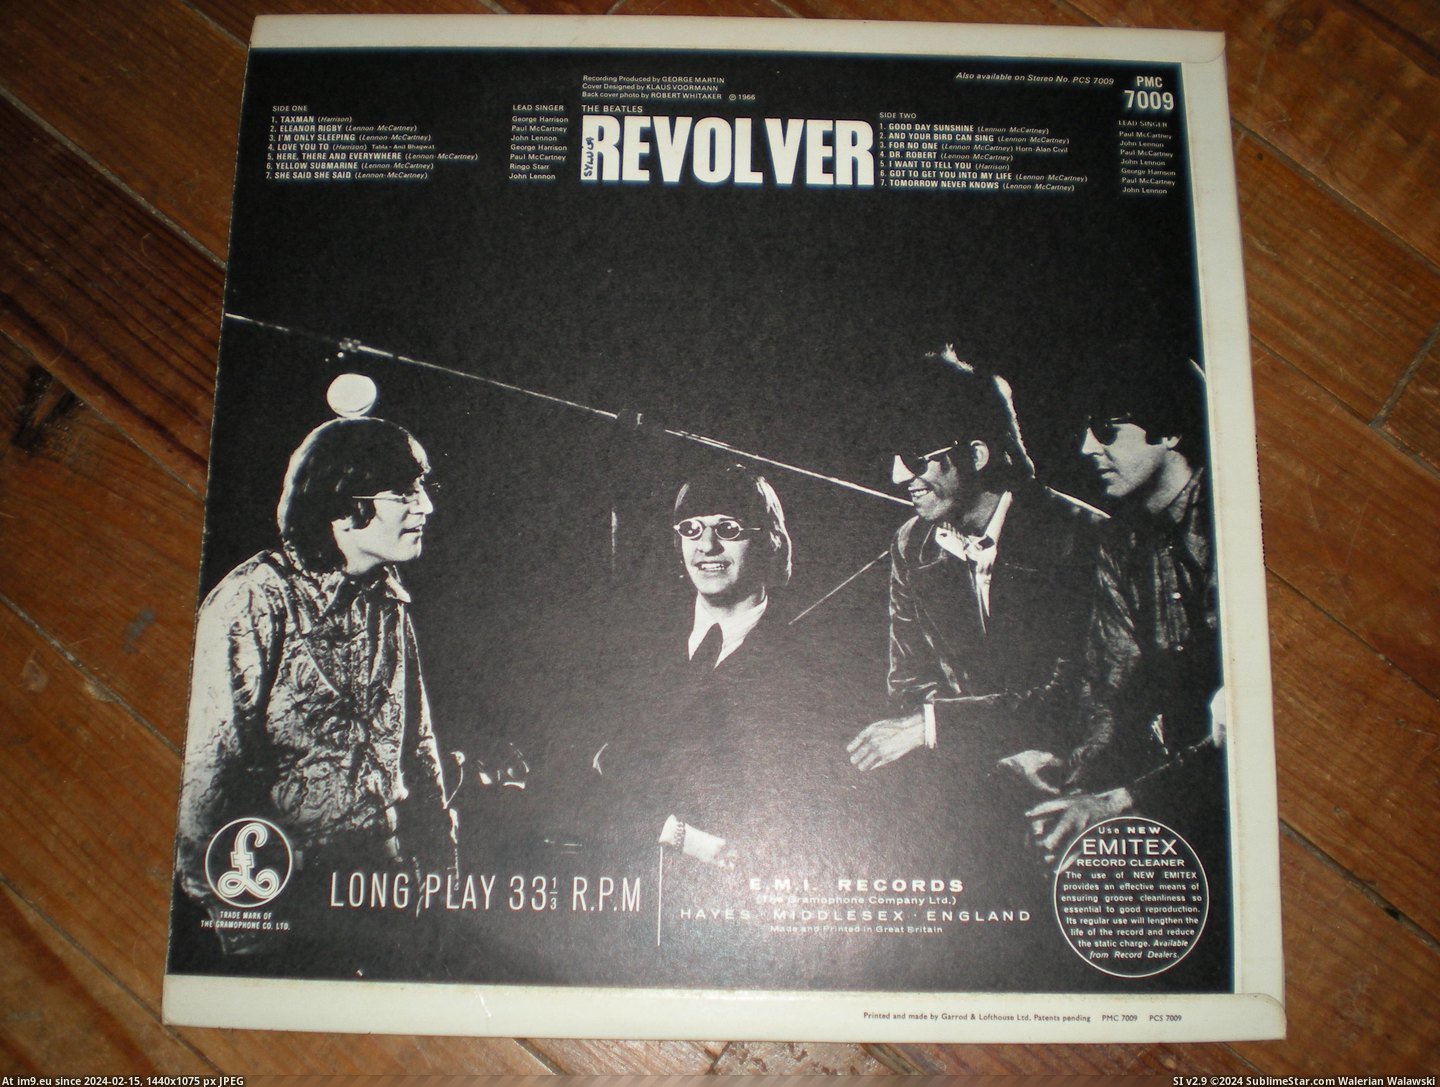  #Revolver  Revolver -2-3 7 Pic. (Изображение из альбом new 1))